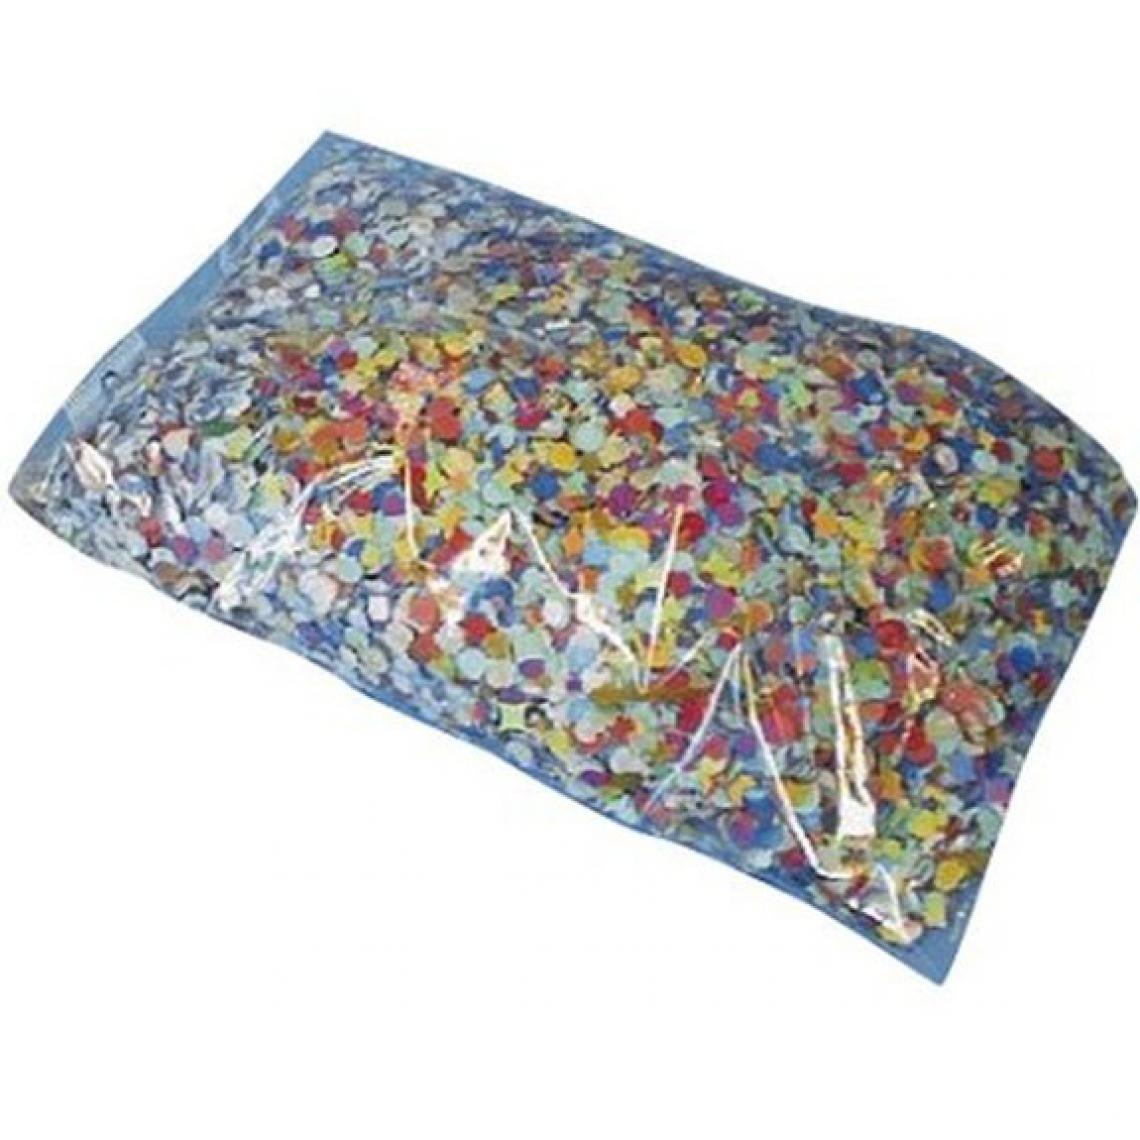 Ludendo - Sachet de 450g de Confettis multicolores - Maquillage et coiffure